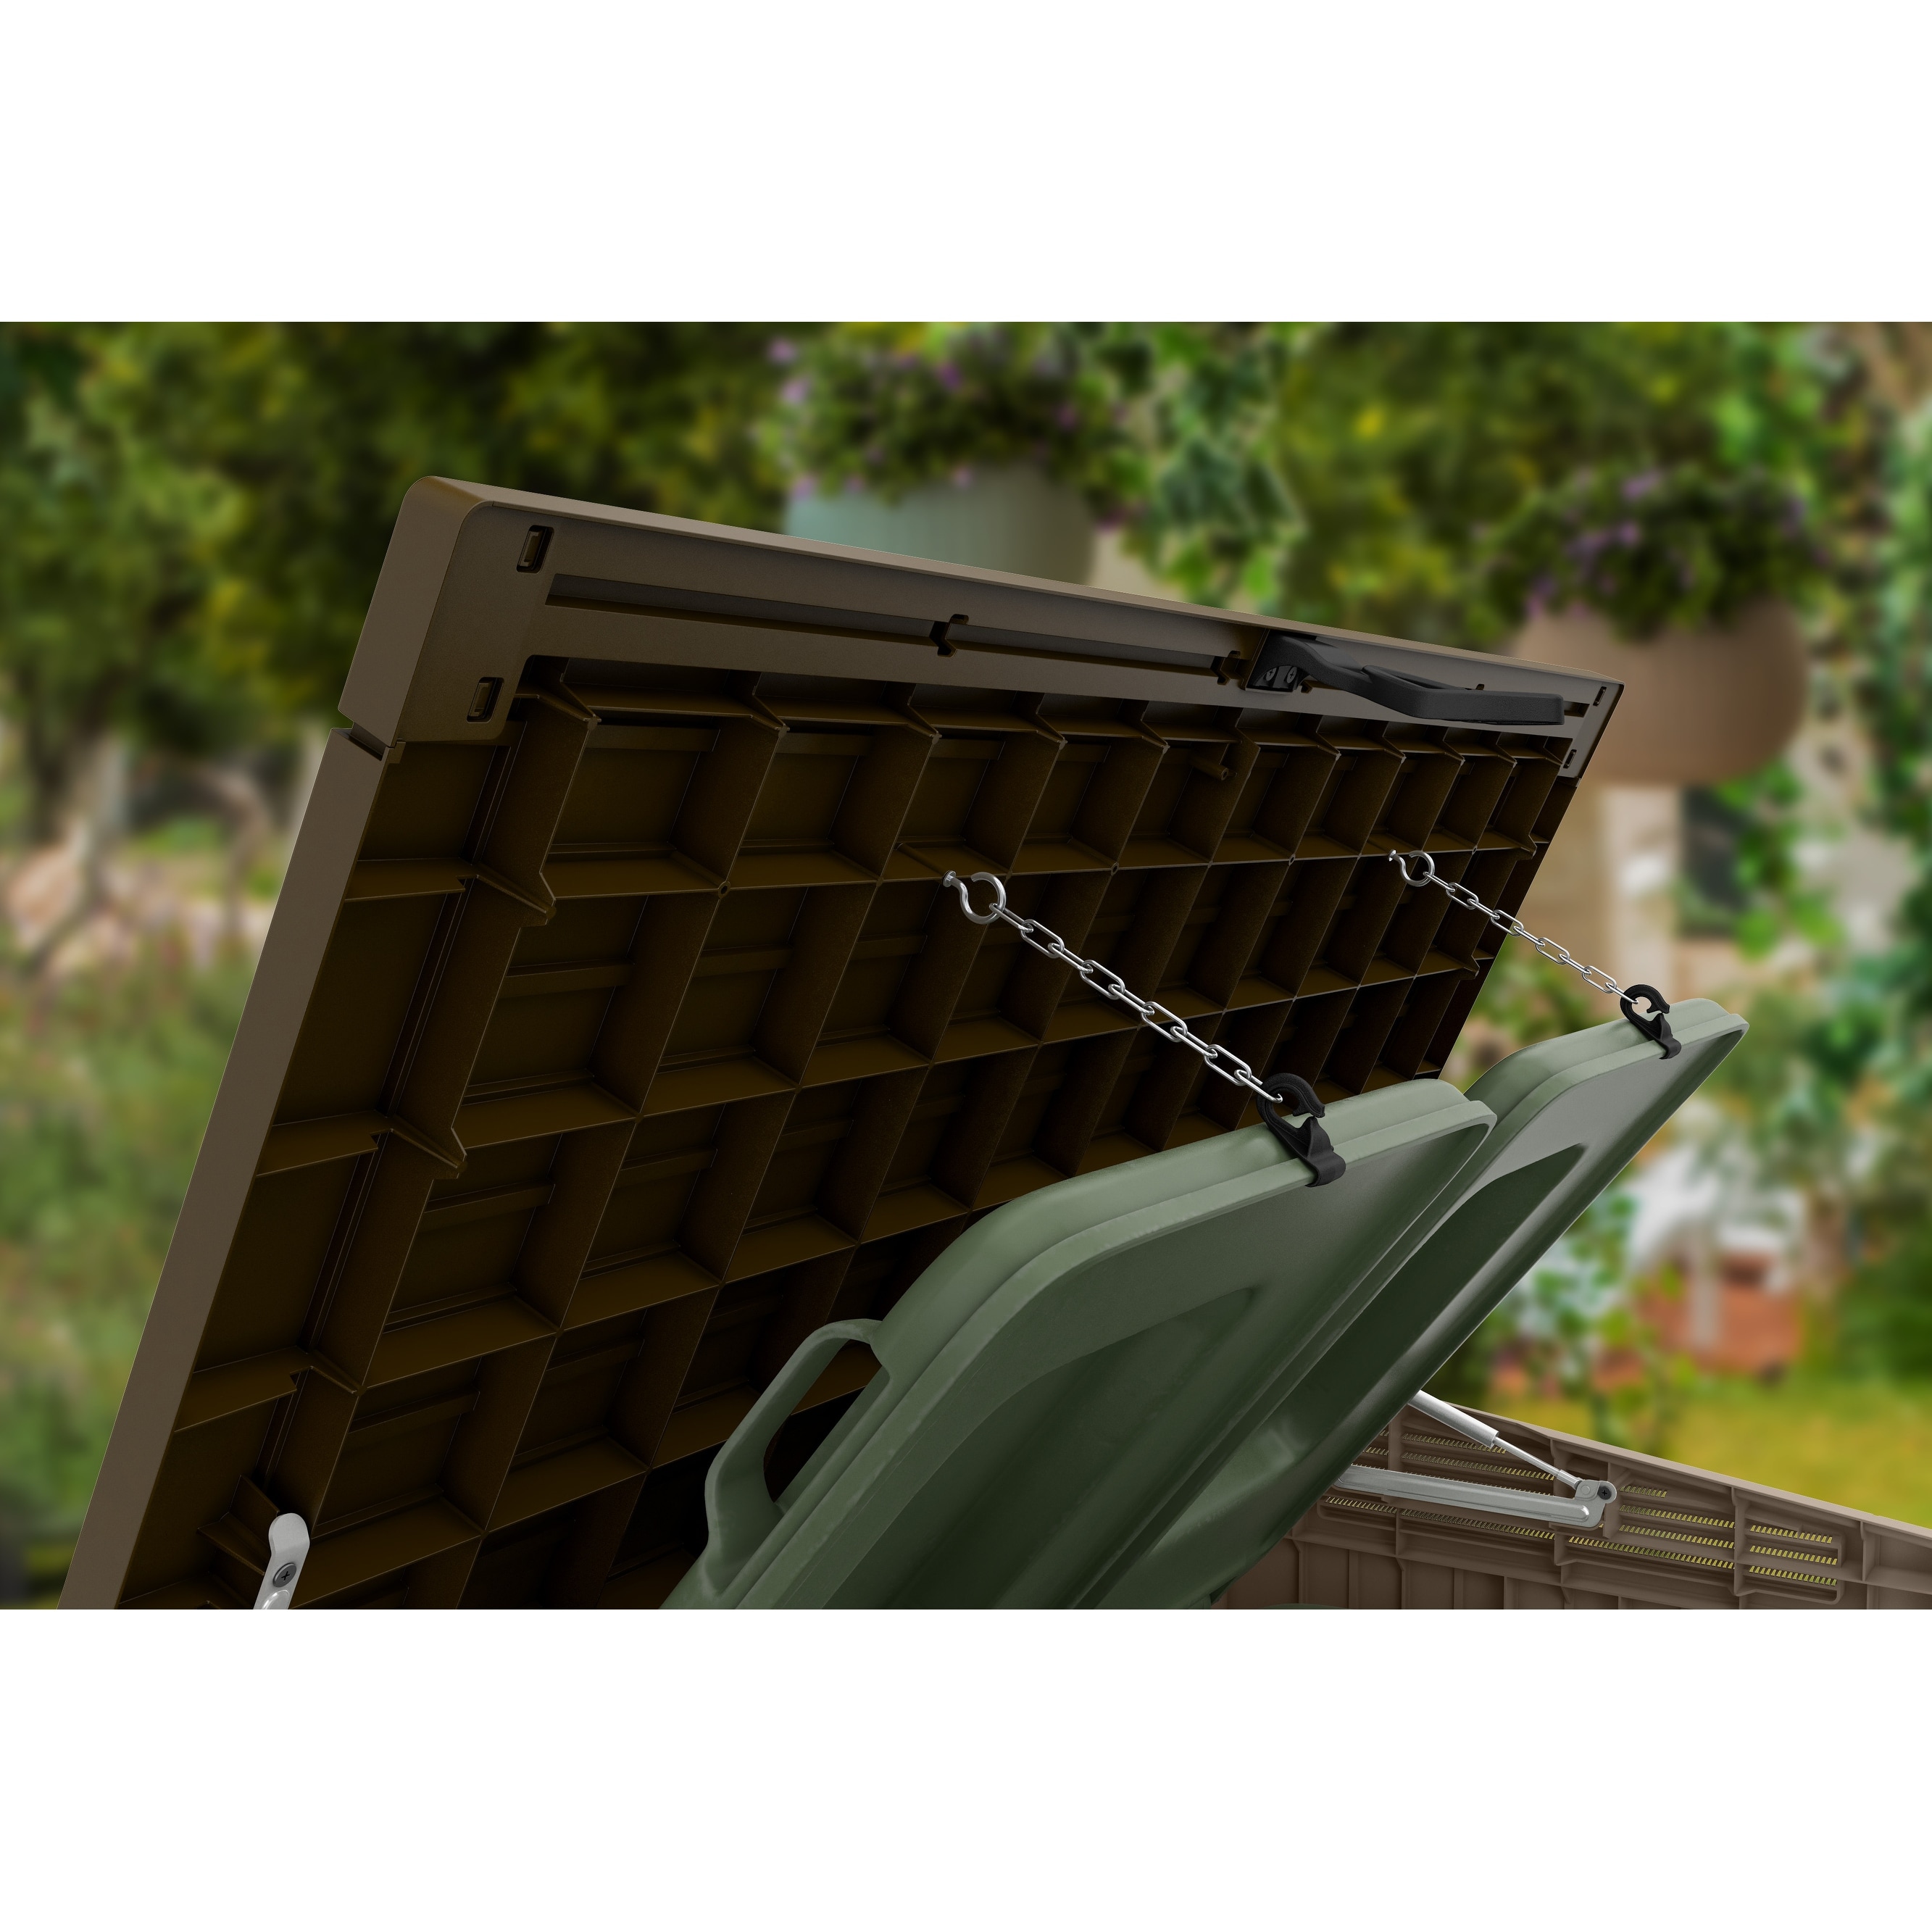 Outdoor Plastic Storage Sheds Withe Lockable Design,Beige - Bed Bath &  Beyond - 38121559